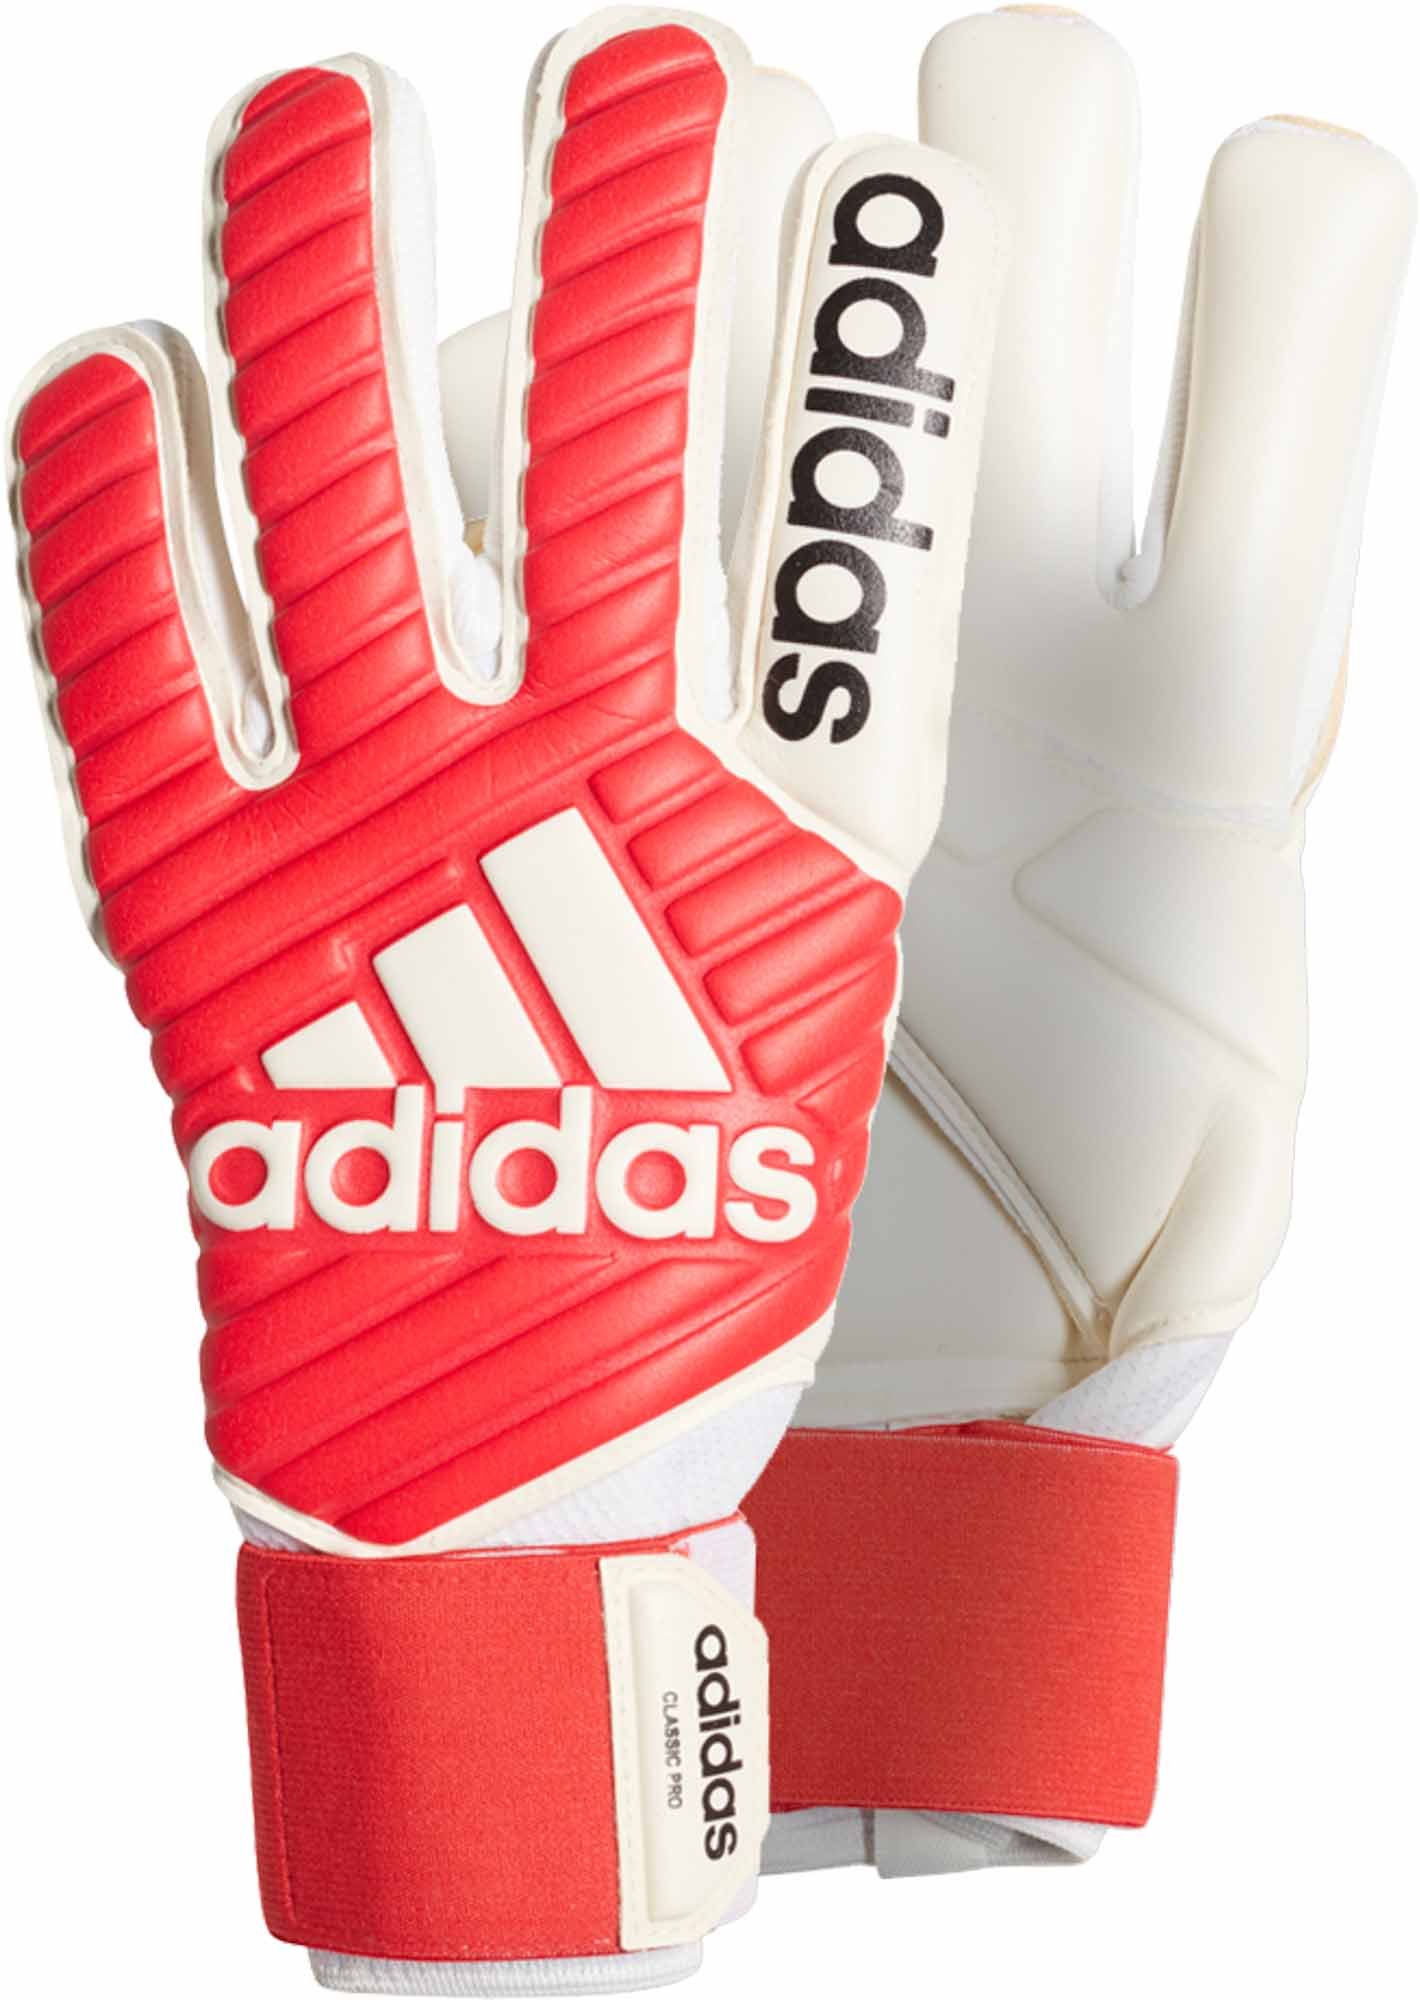 adidas classic goalkeeper gloves